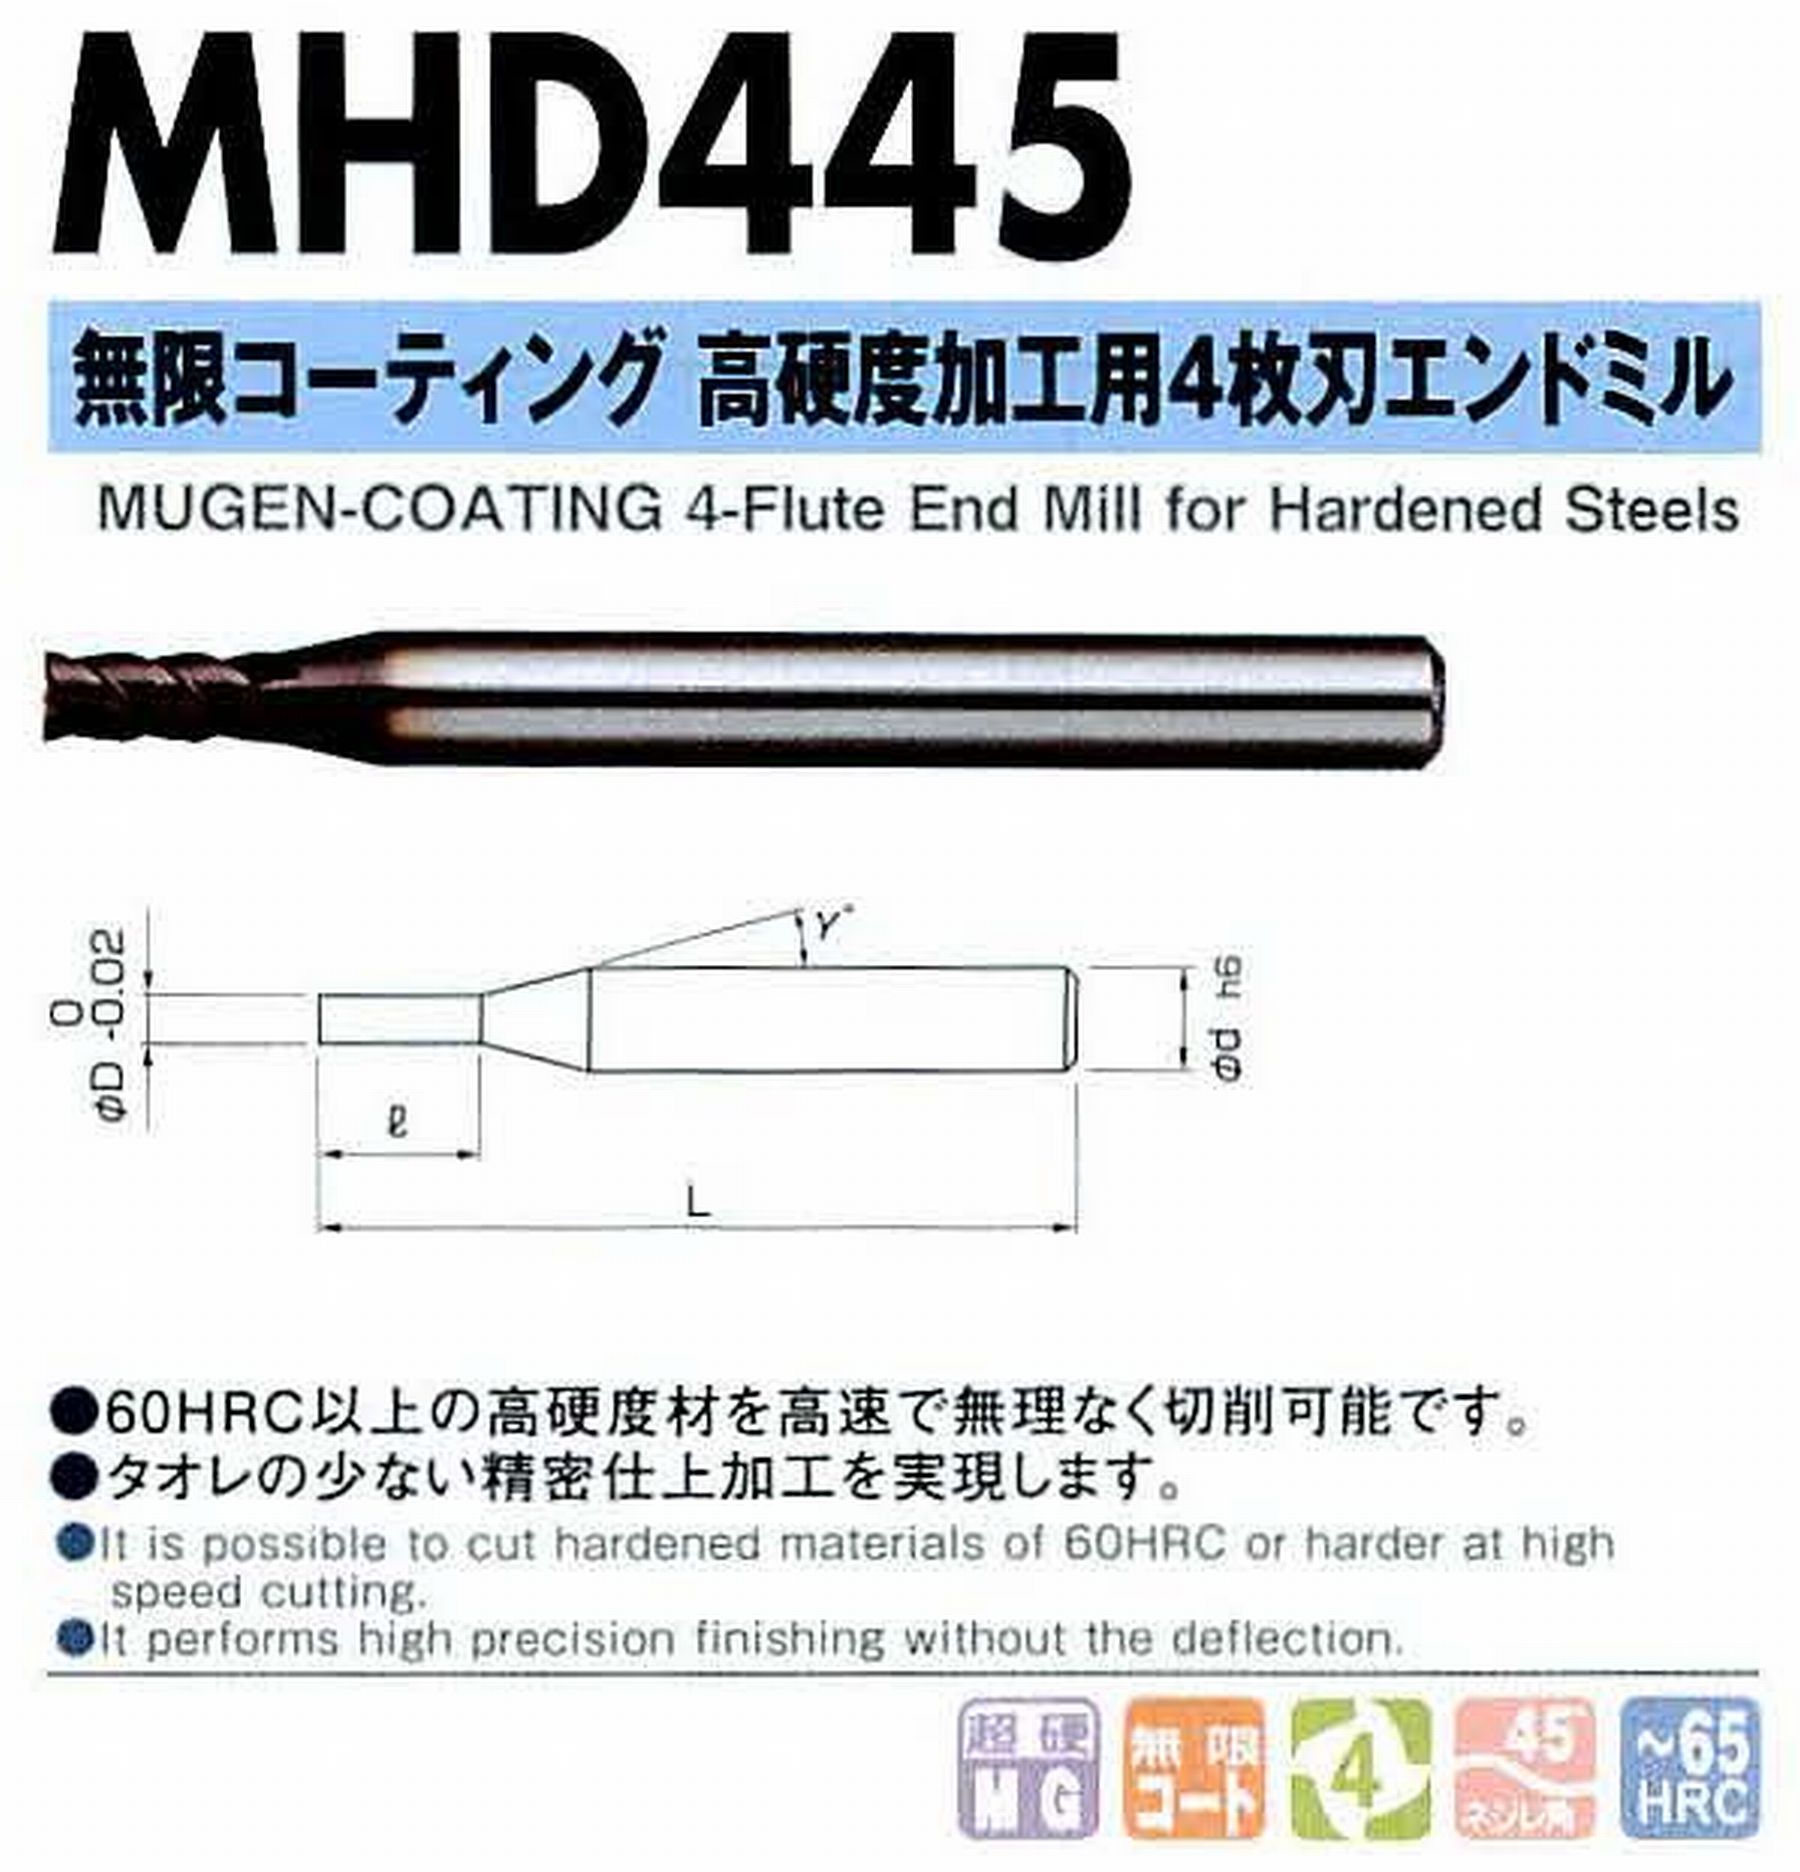 NS 日進工具 MHD445 無限コーティング高硬度加工用4枚刃エンドミル コードNO．08-00400-00100 刃径1 刃長1.5 首角12° シャンク径6mm 全長60